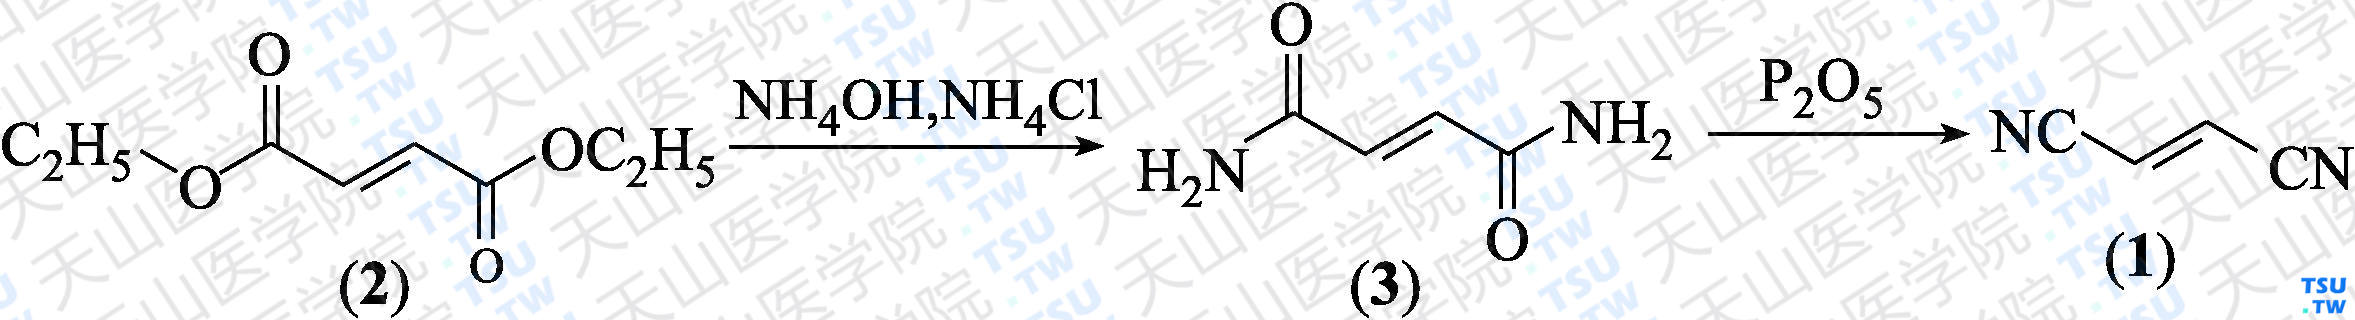 富马腈（分子式：C<sub>4</sub>H<sub>2</sub>N<sub>2</sub>）的合成方法路线及其结构式